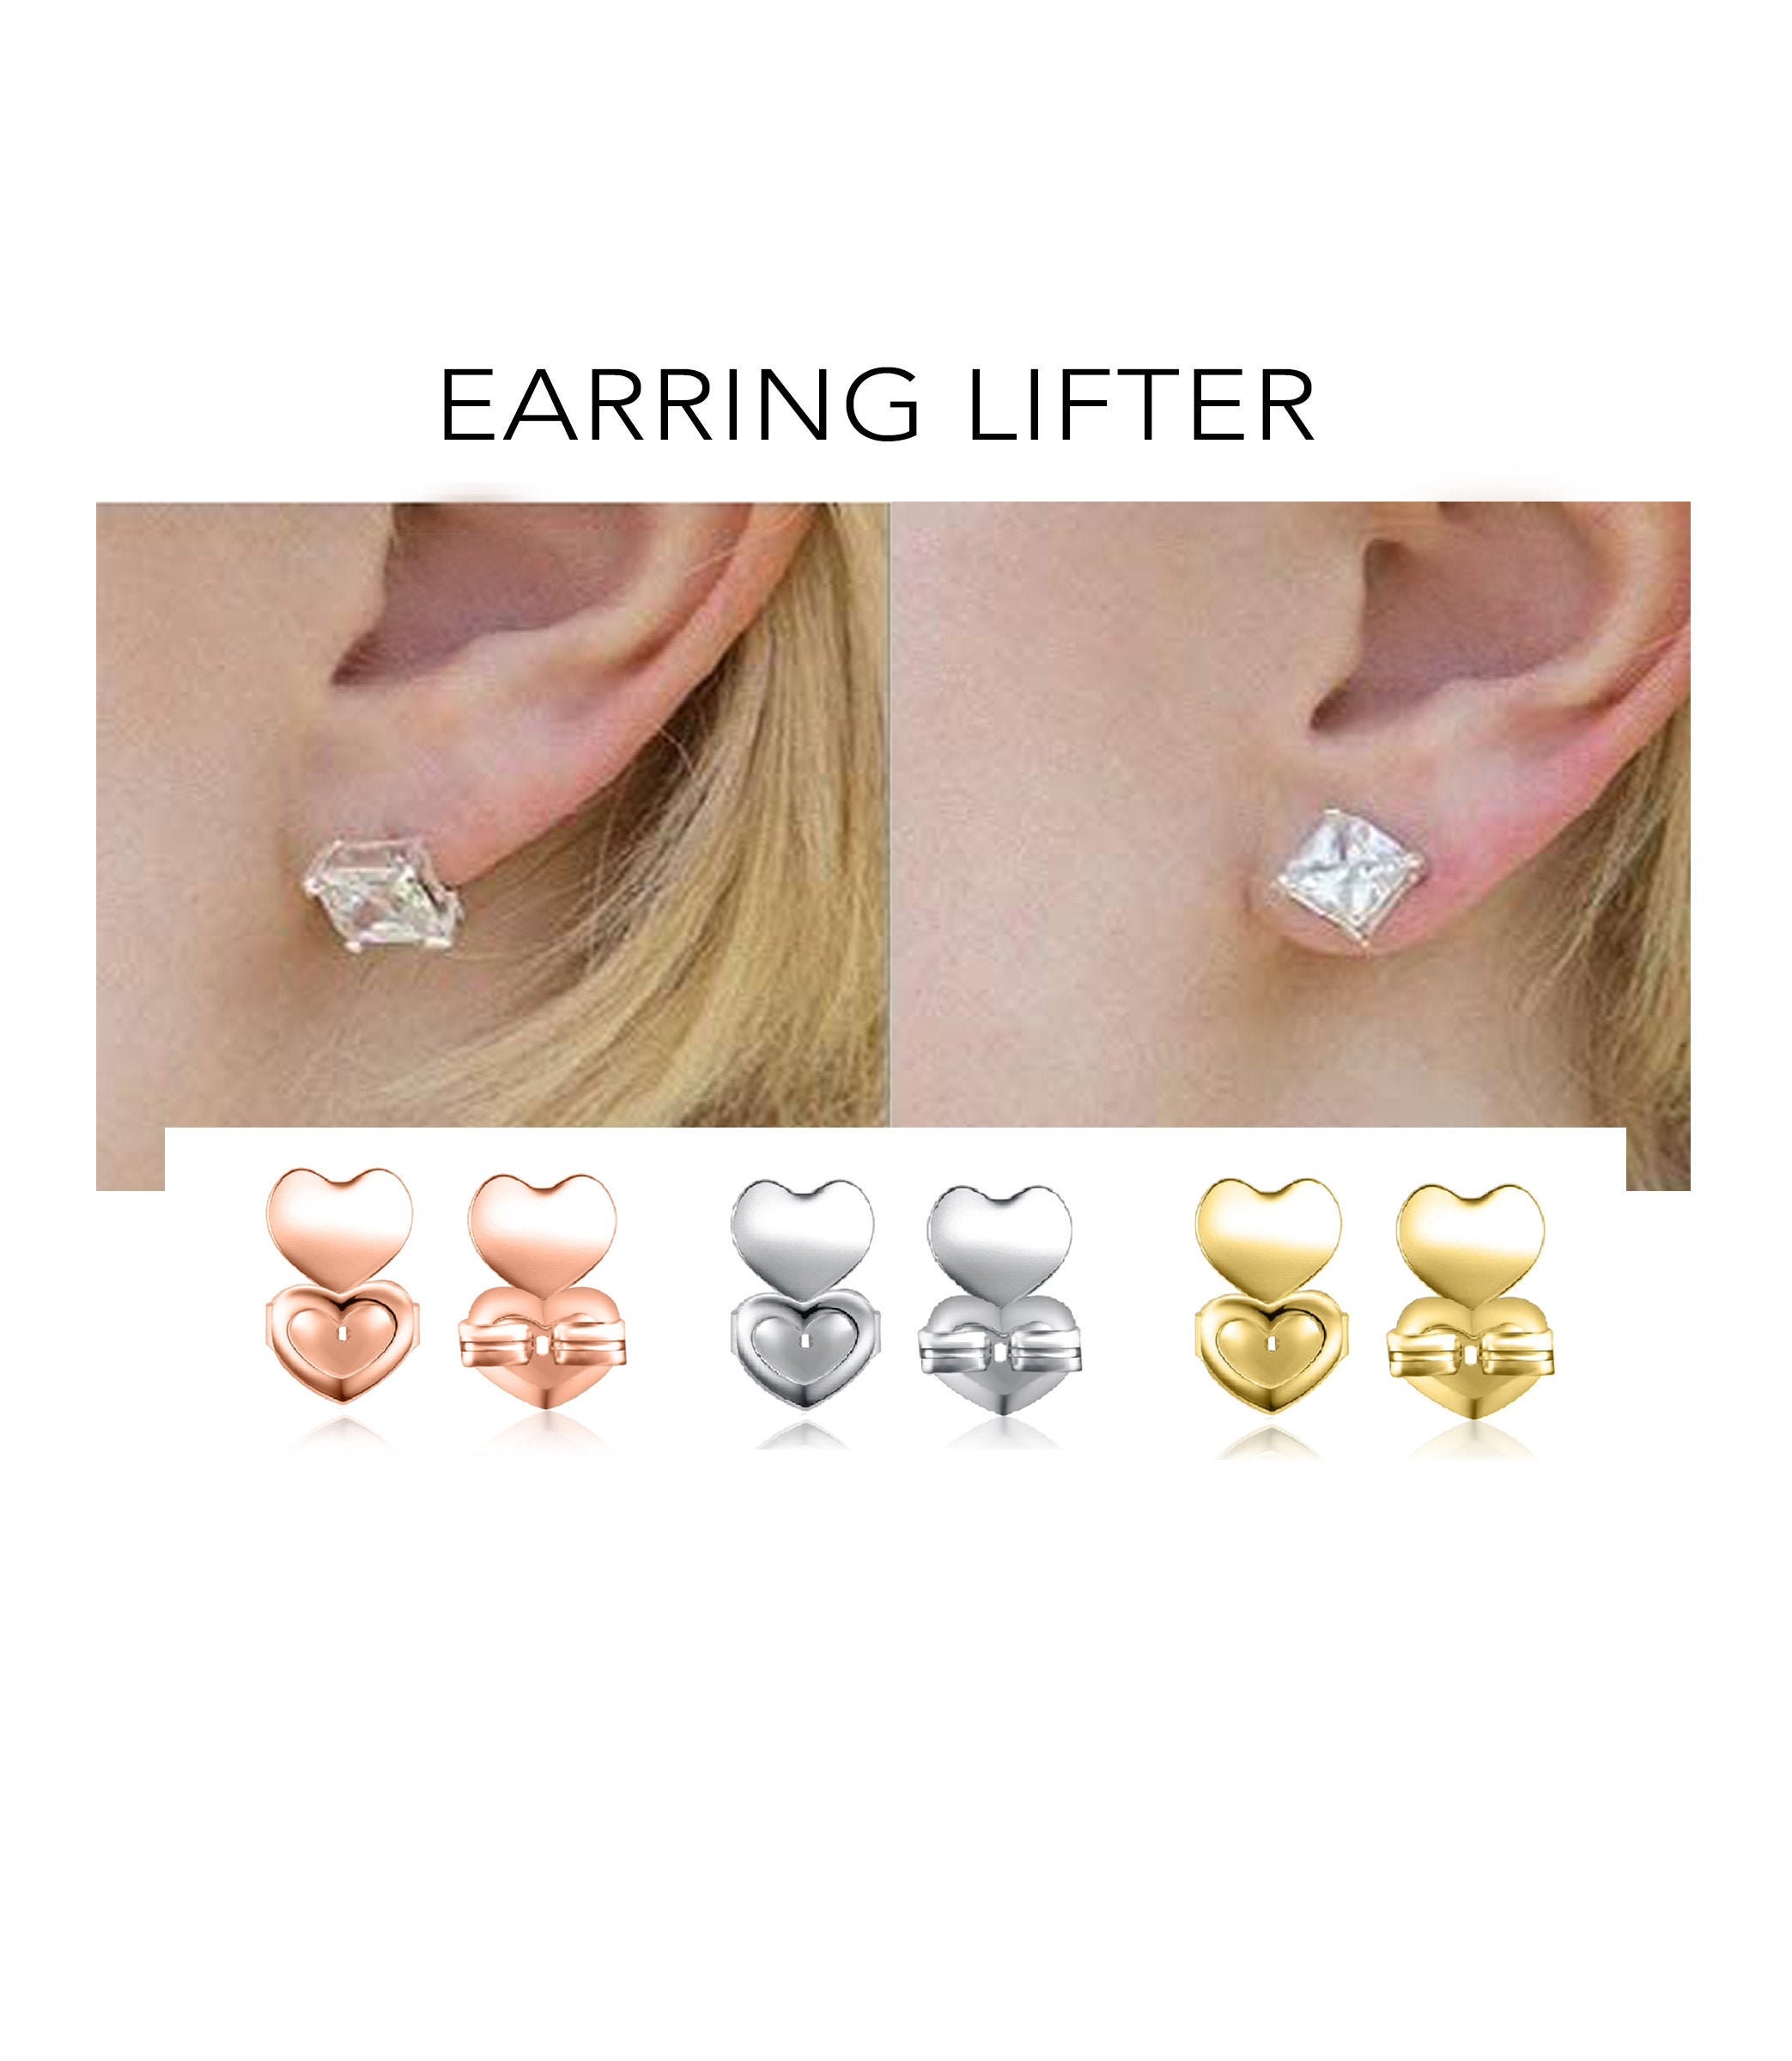 Earring Lifter Backs Lifting Earring Backs Earring Lifters Gold Silver  Earrings Lifters Earring Lifter Backs Earring Backs Support 